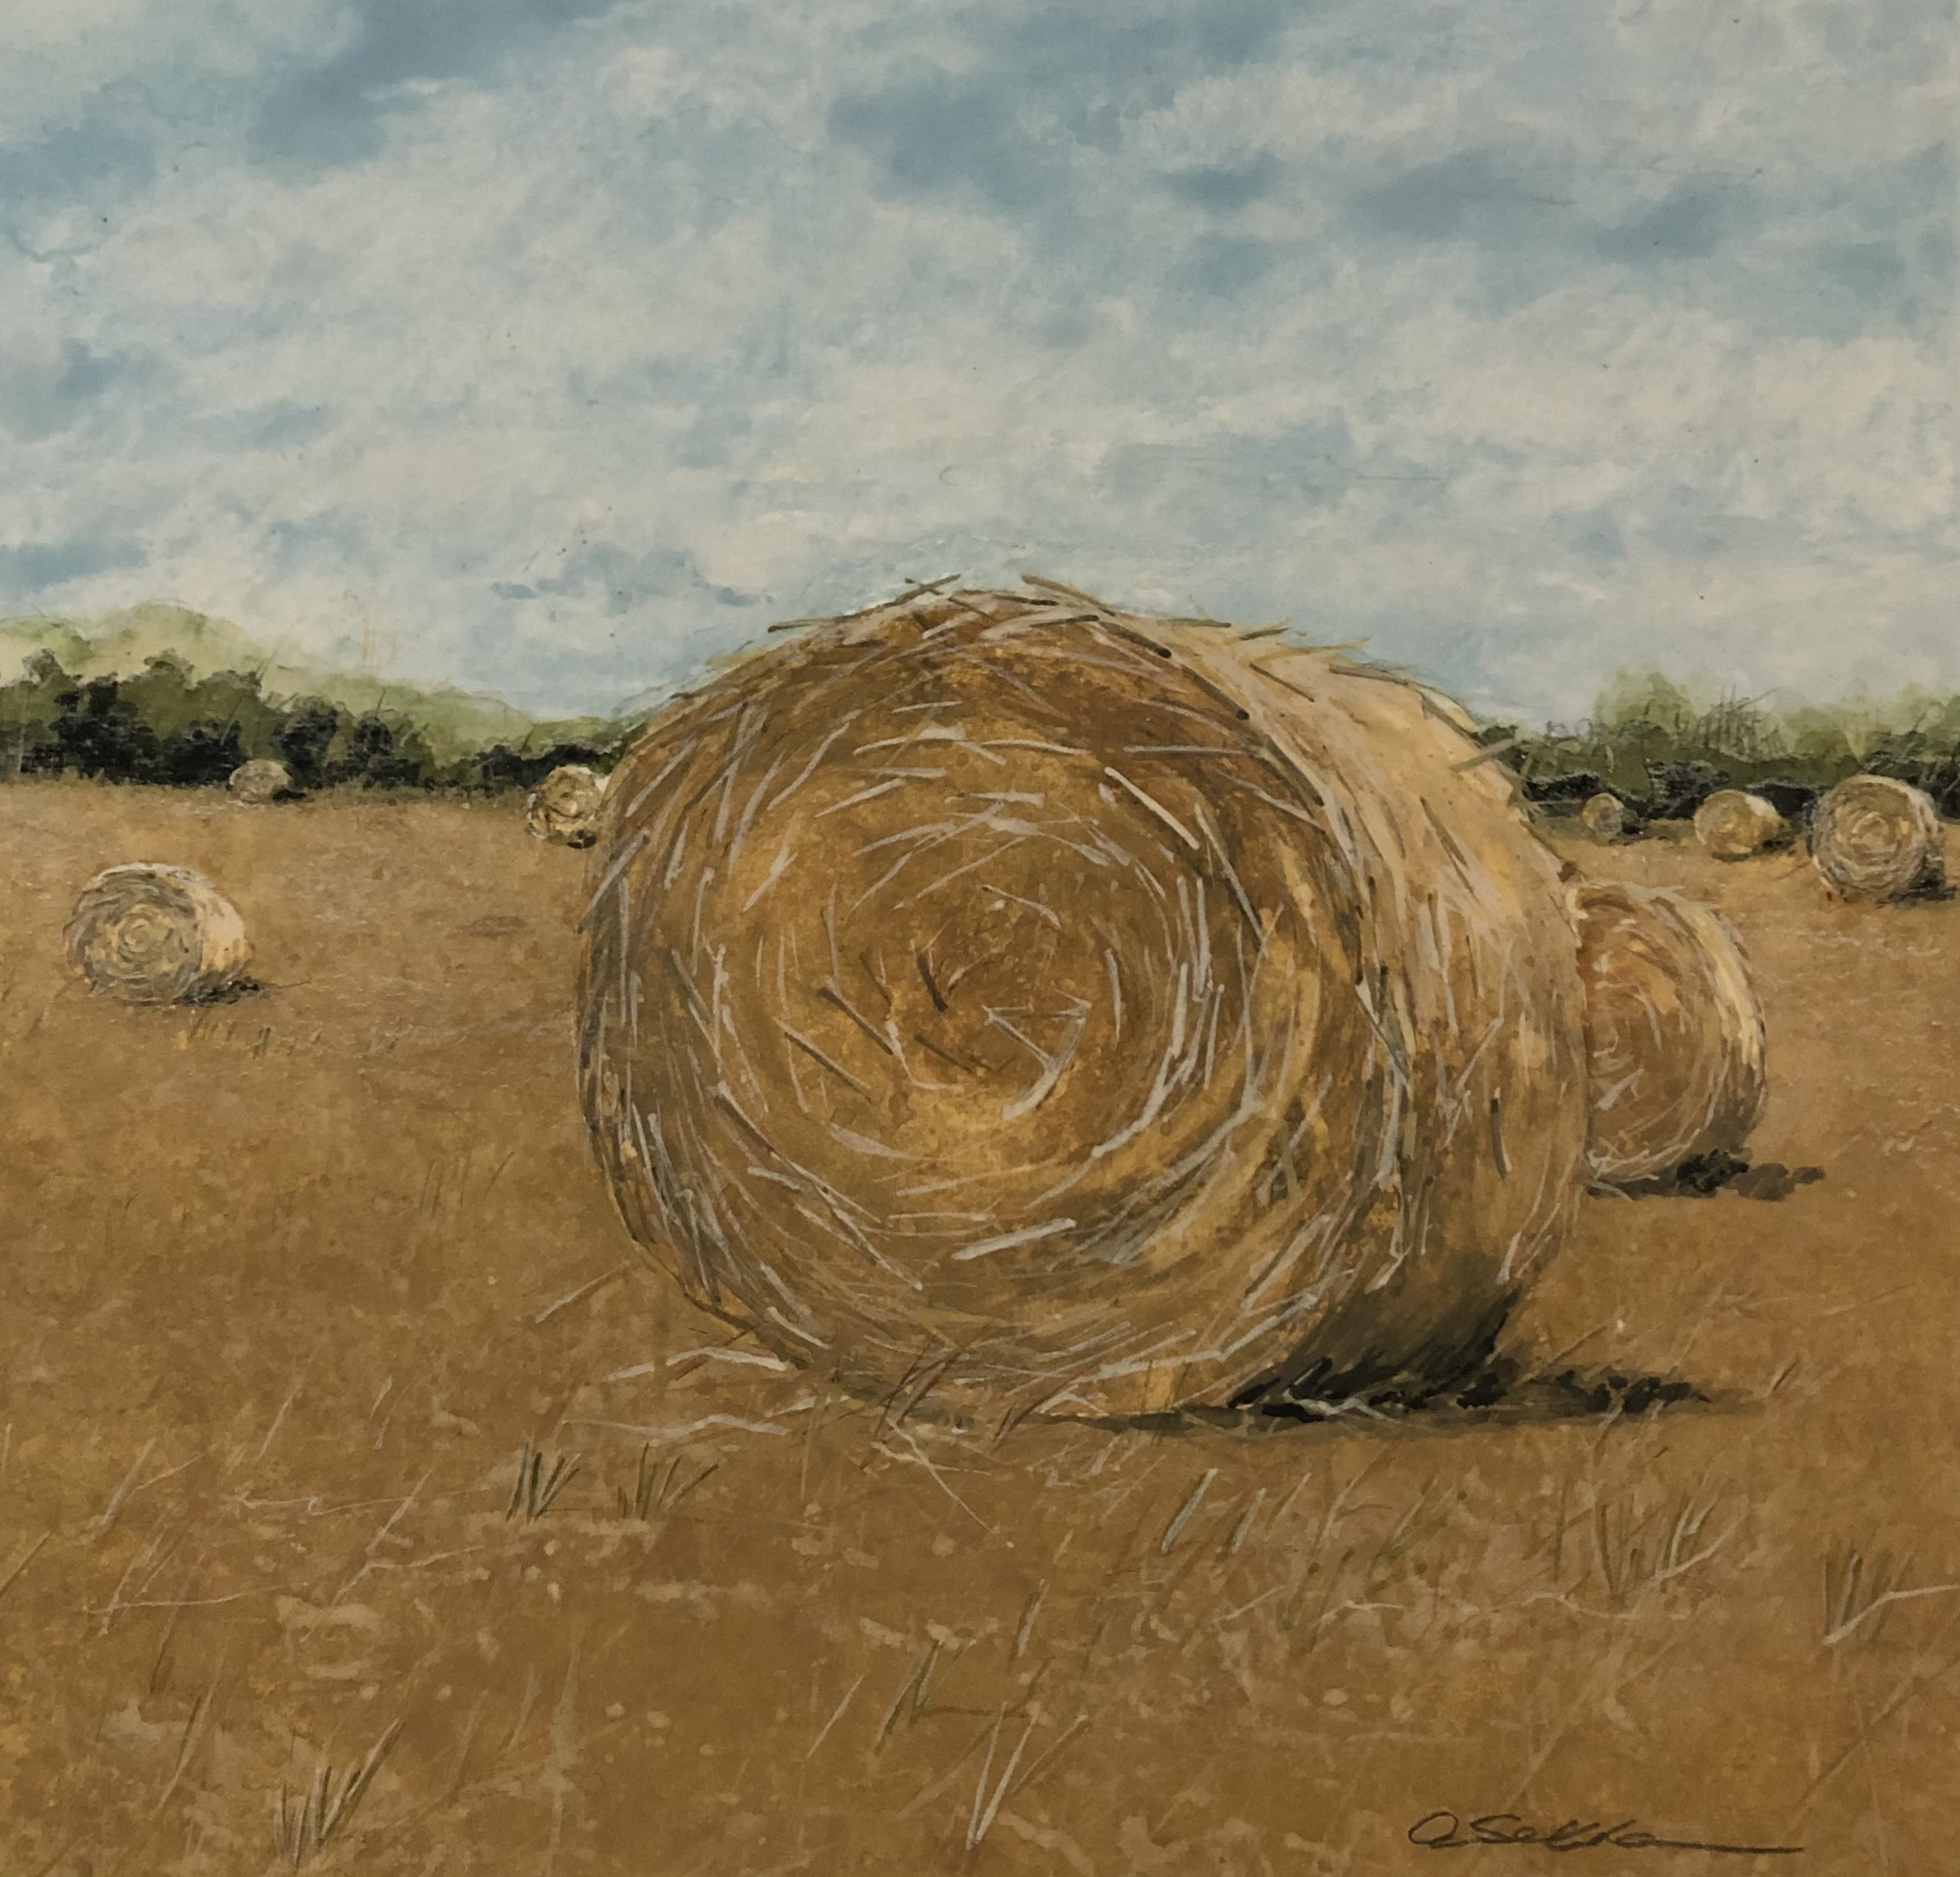 Cinnamon Roll; Portrait of a Hay Bale